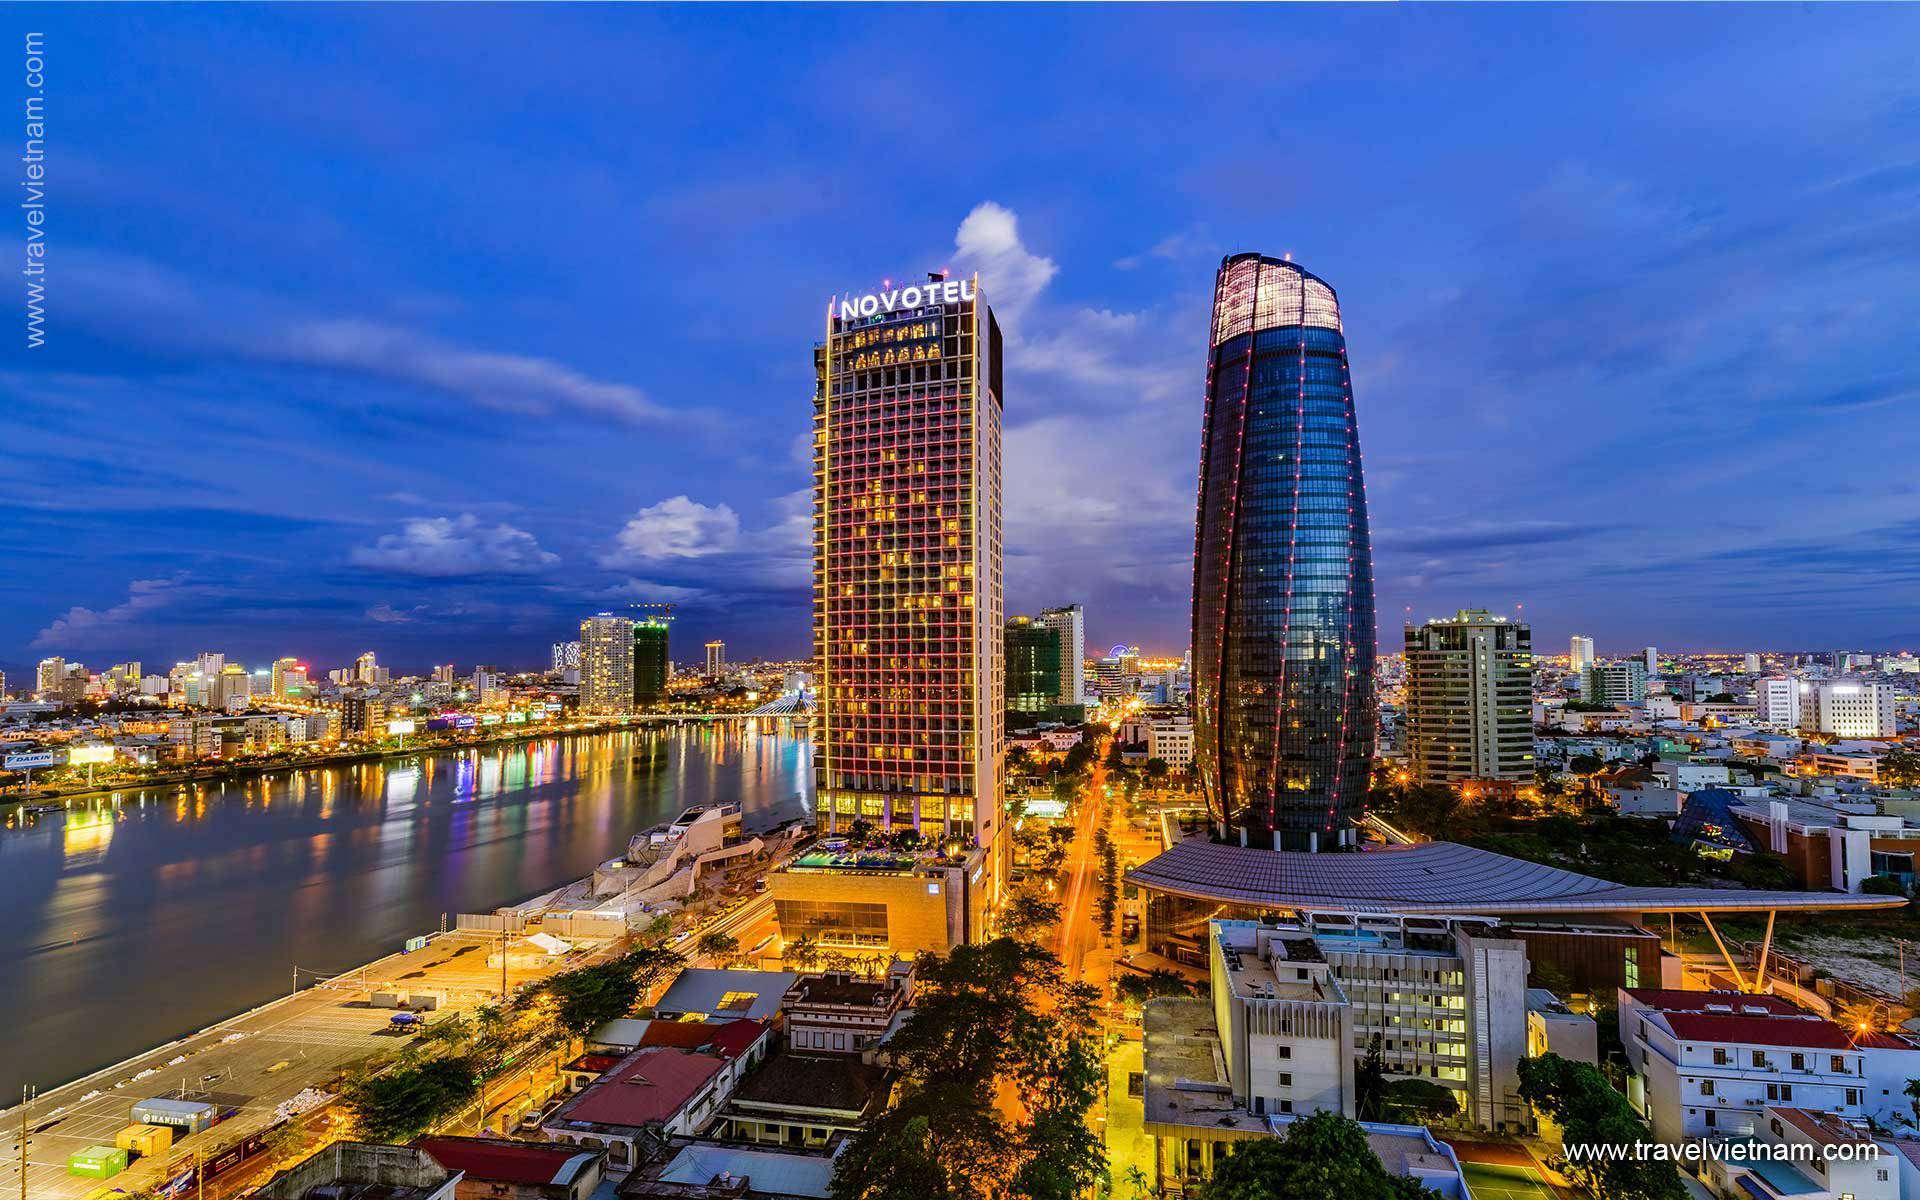 Vietnam Tours from Bangkok